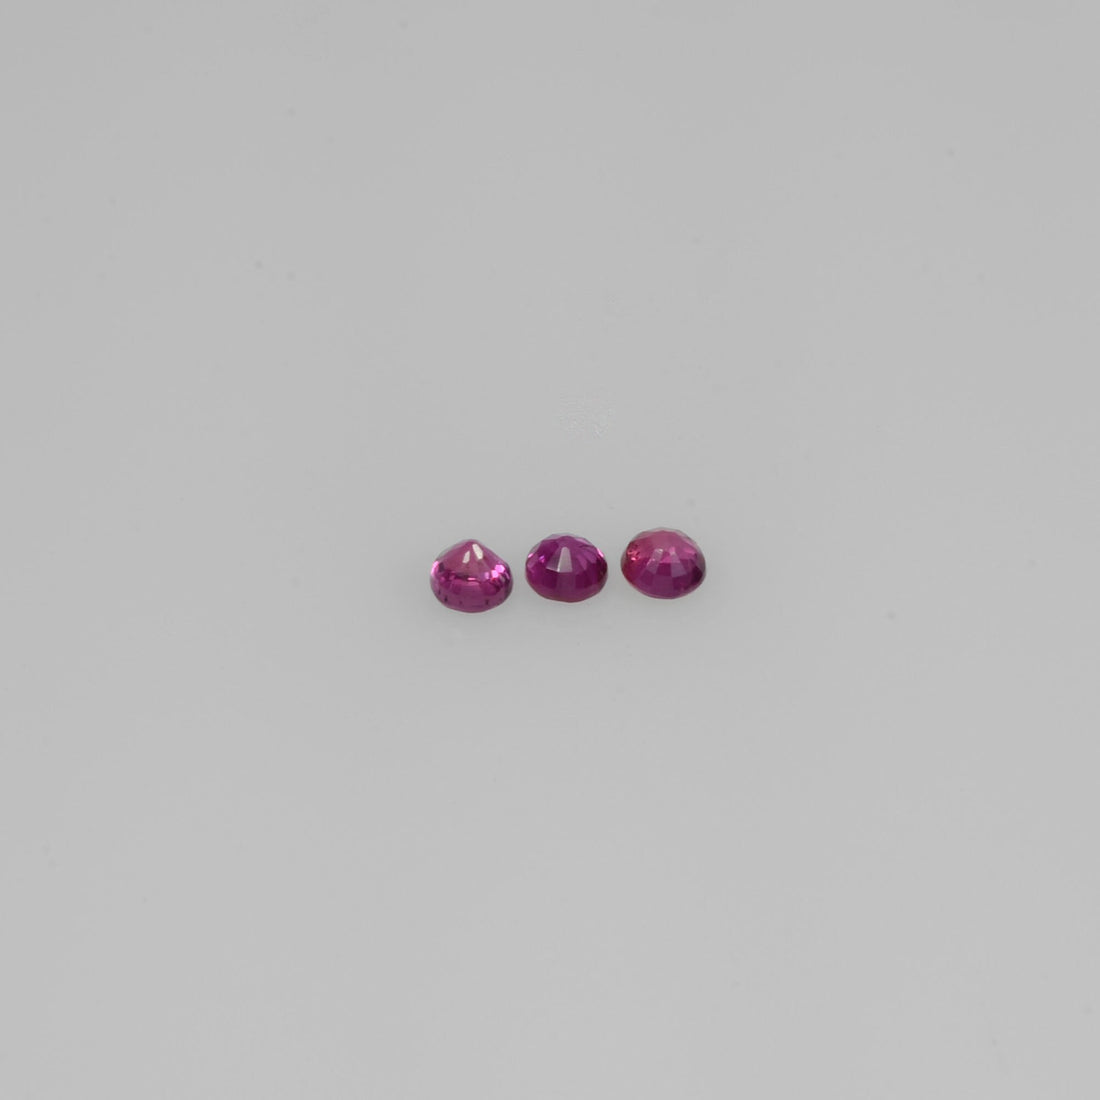 1.4-2.6 mm Natural Ruby Loose Gemstone Round Cut